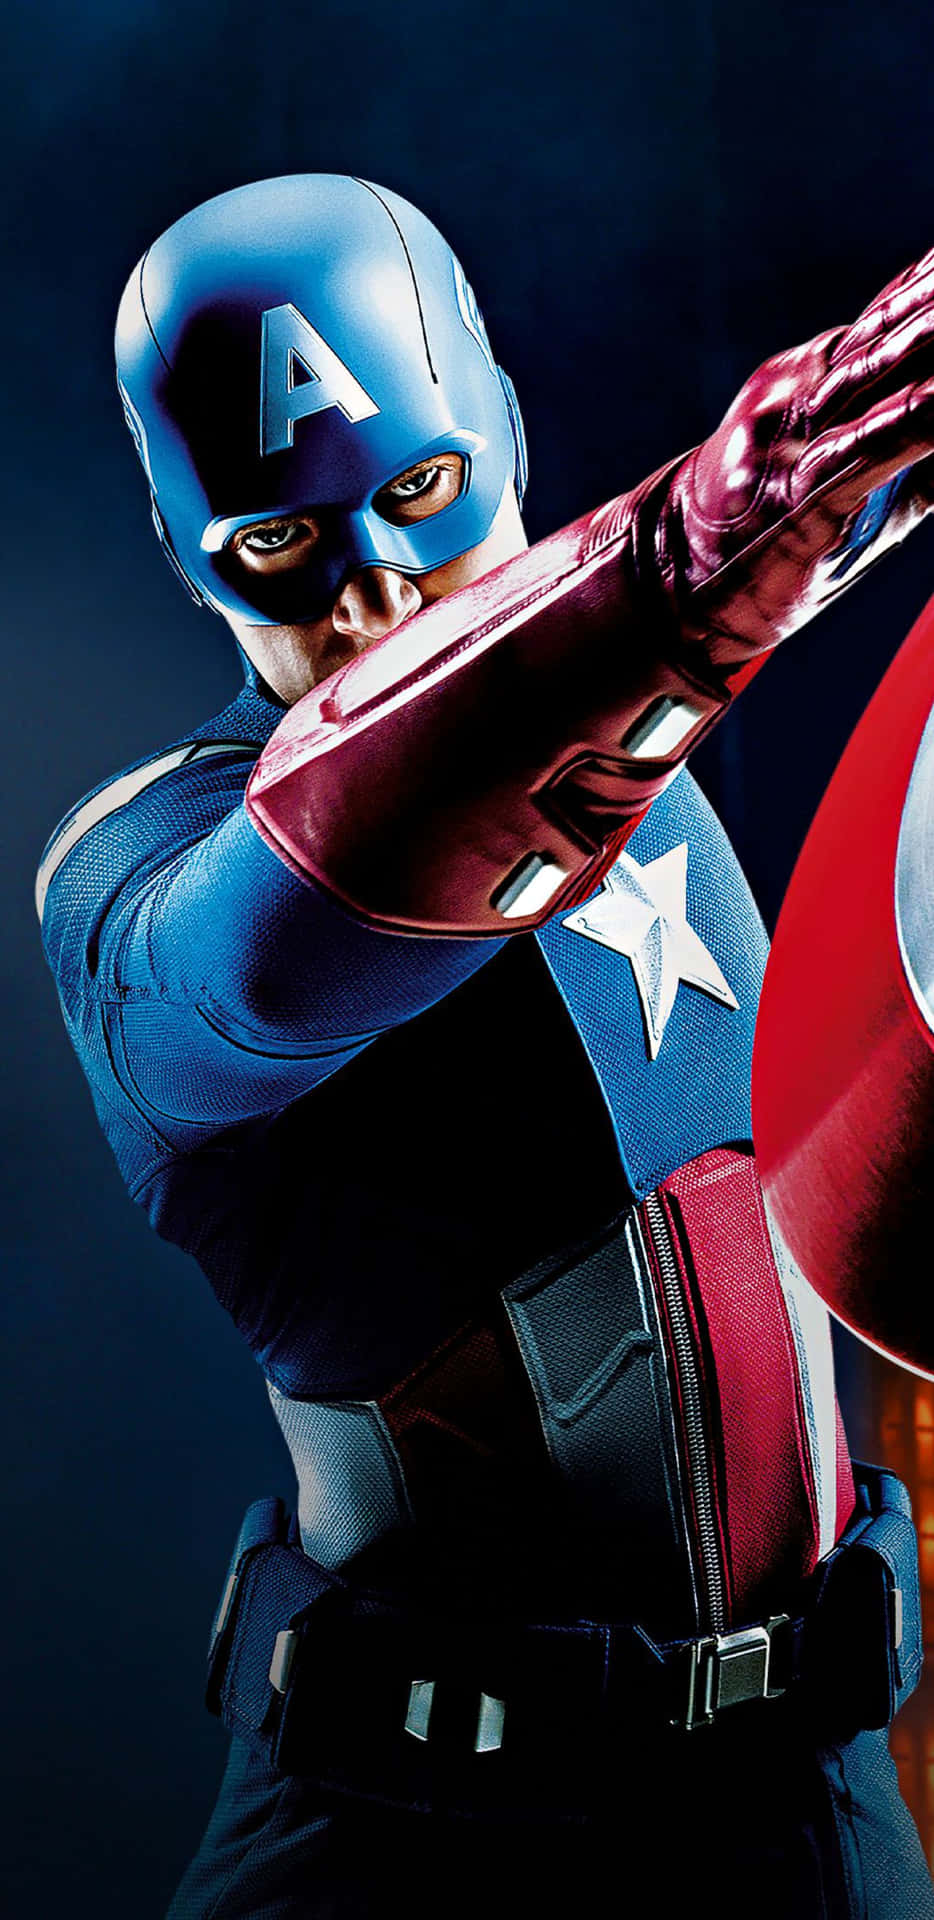 Papelde Parede Capitão América Avengers Pixel 3xl